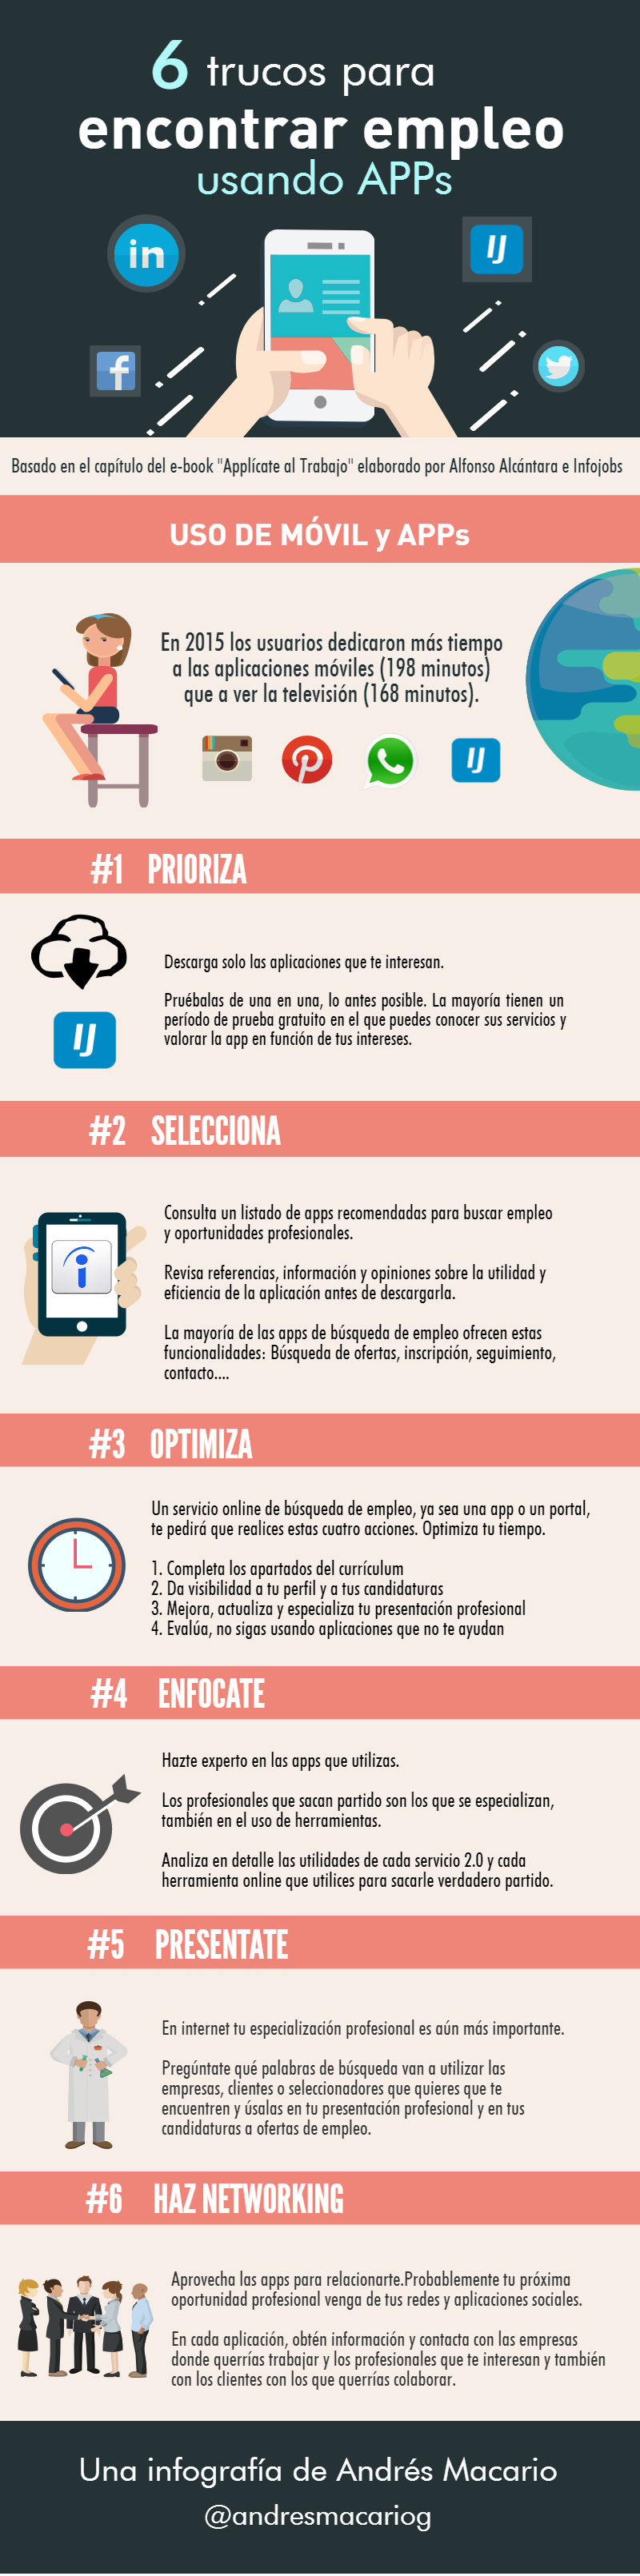 6 trucos para encontrar empleo con apps- Infografia Andres Macario